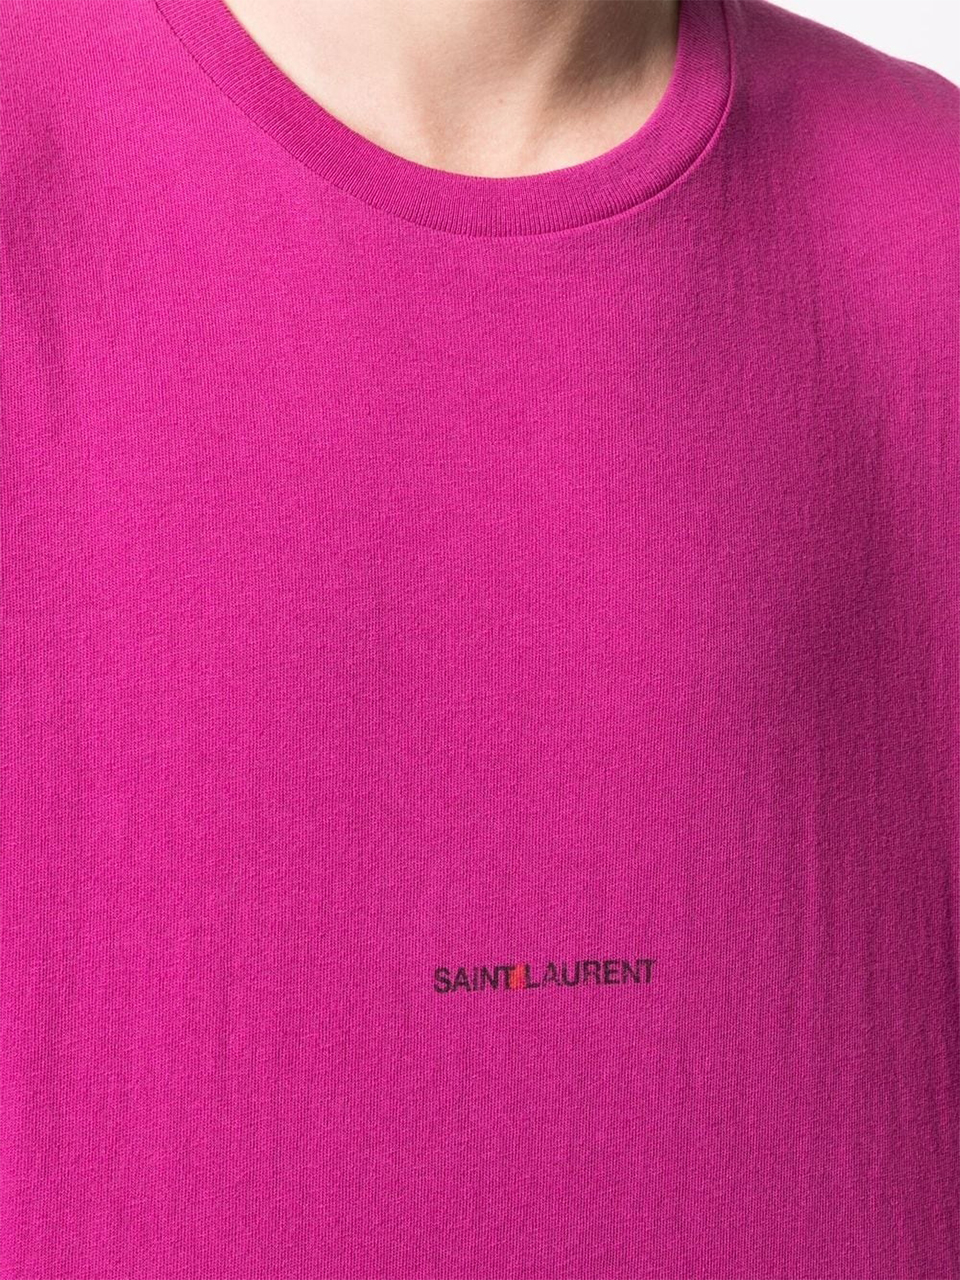 Imagem de: Camiseta Saint Laurent Rosa com Logo